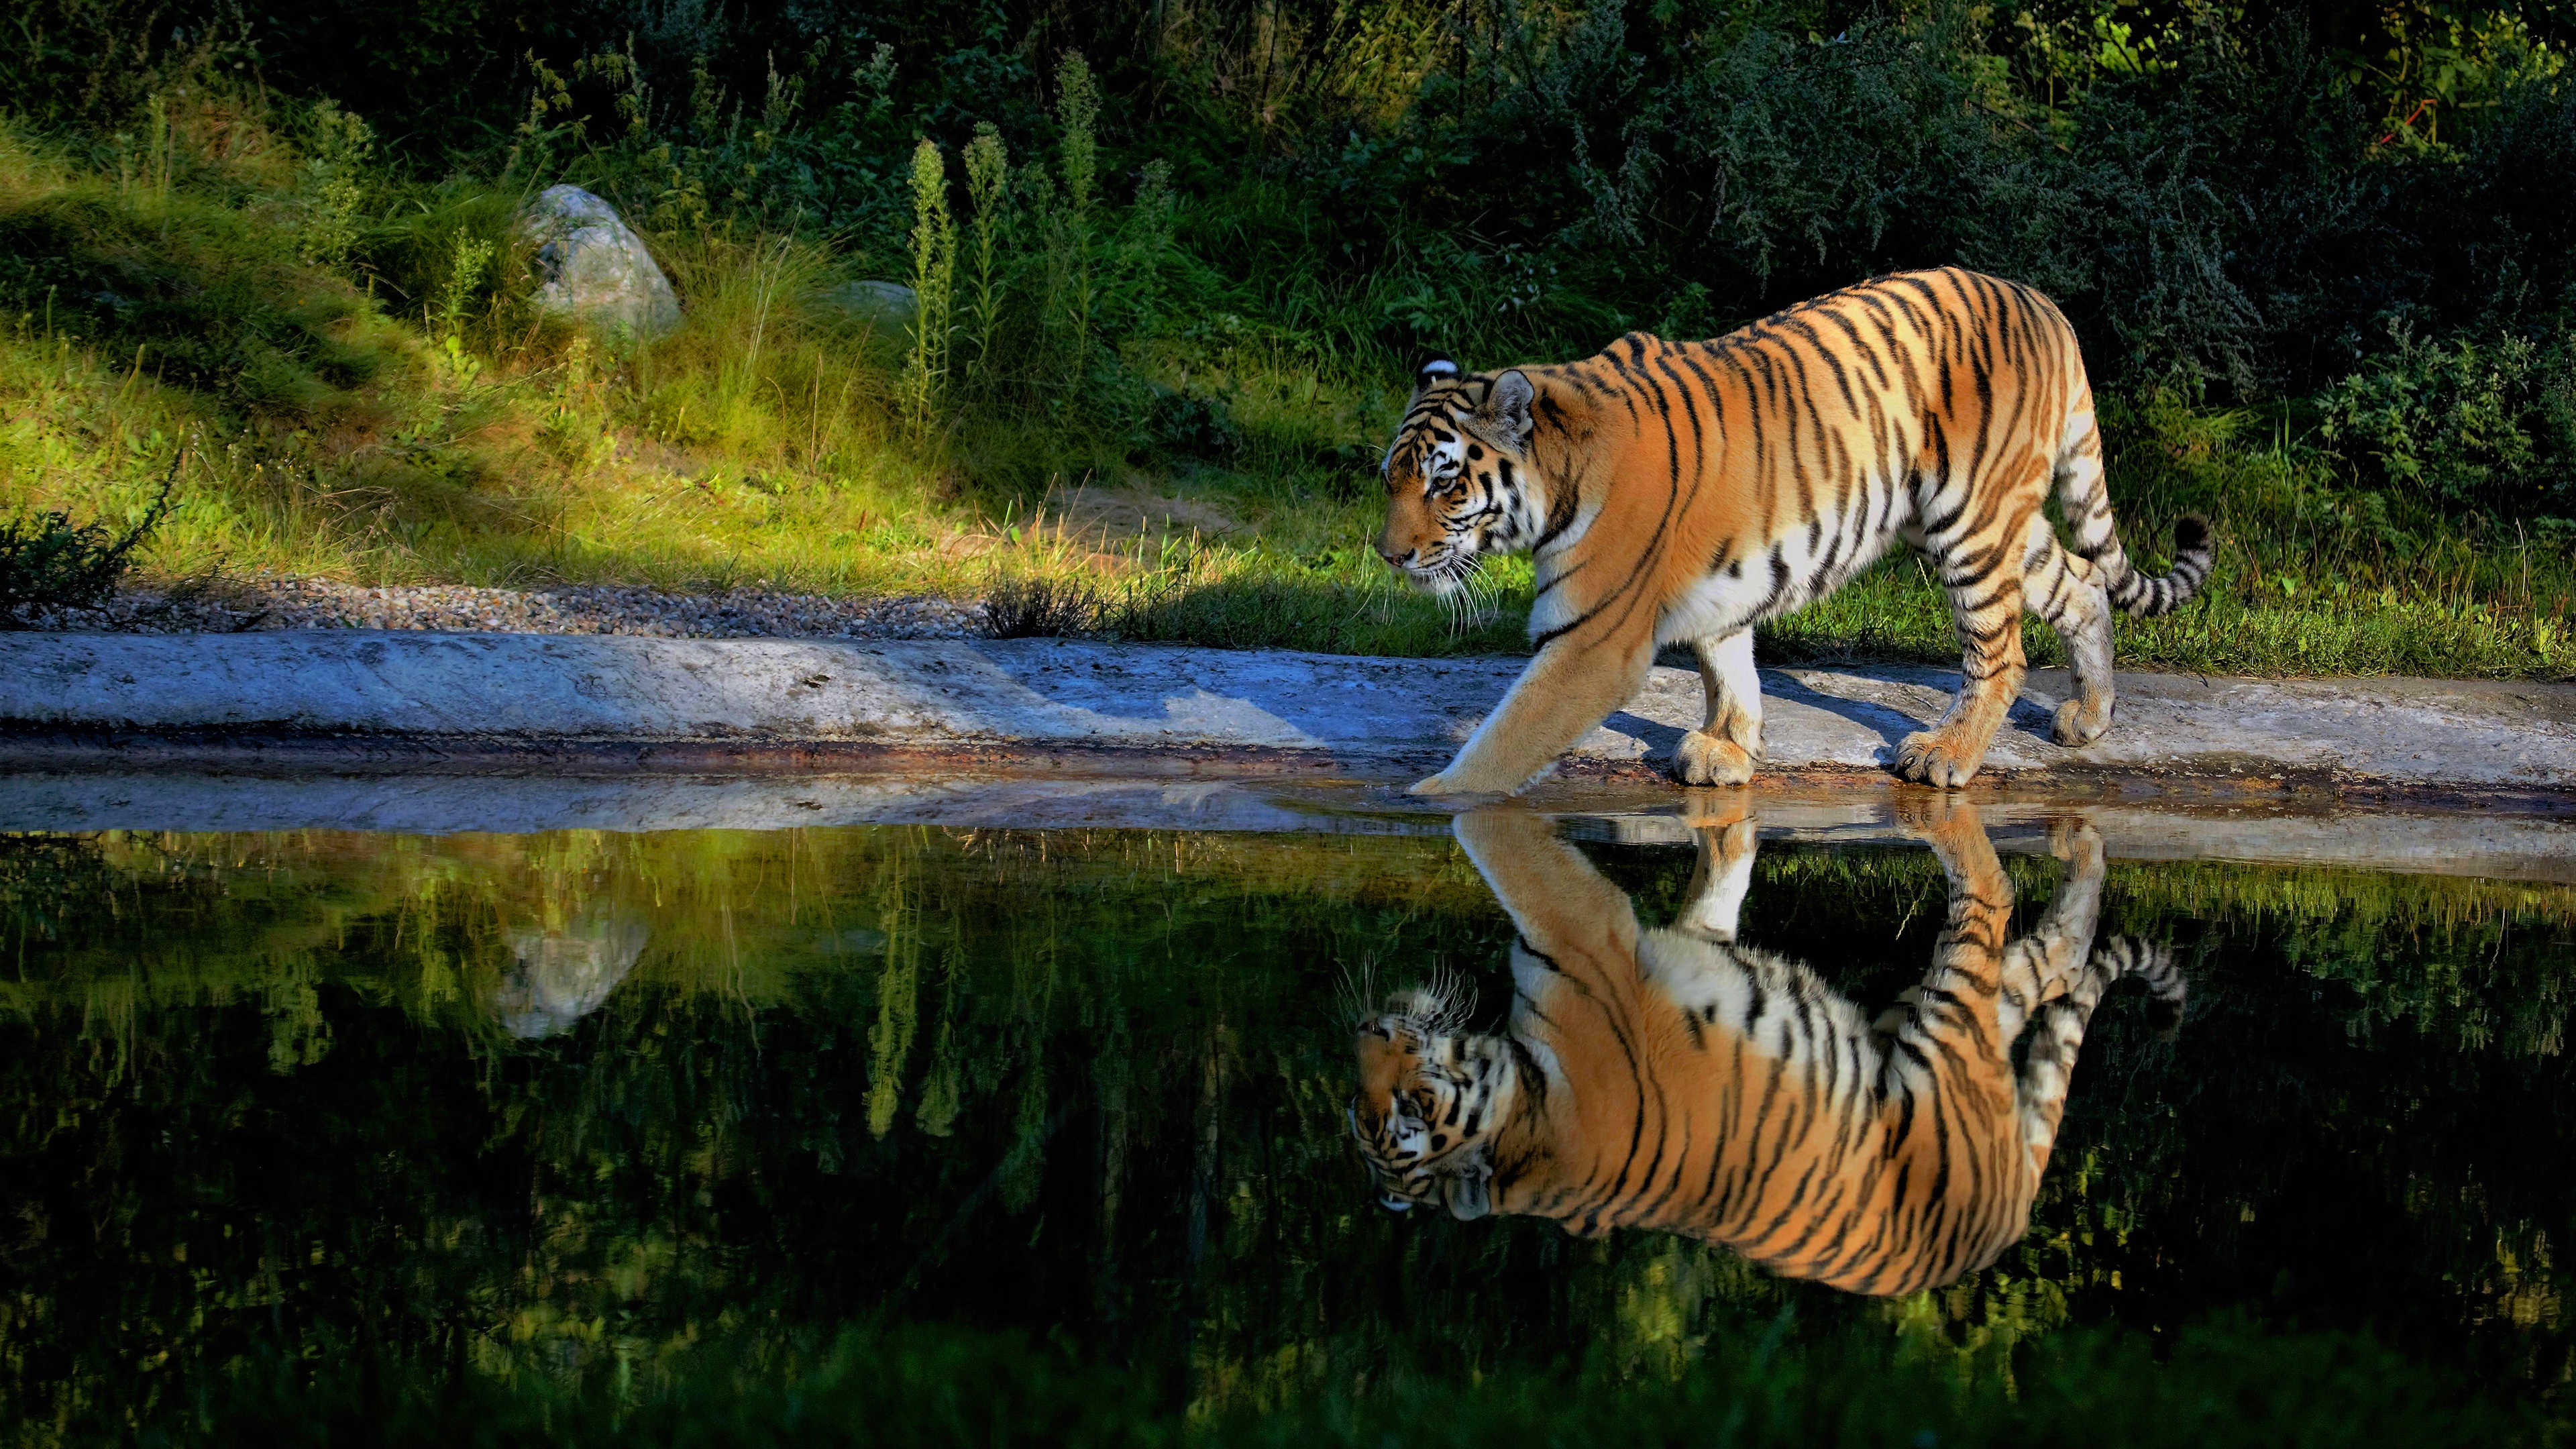  Tiger  4k  Ultra HD Wallpaper  Background Image 3840x2160 